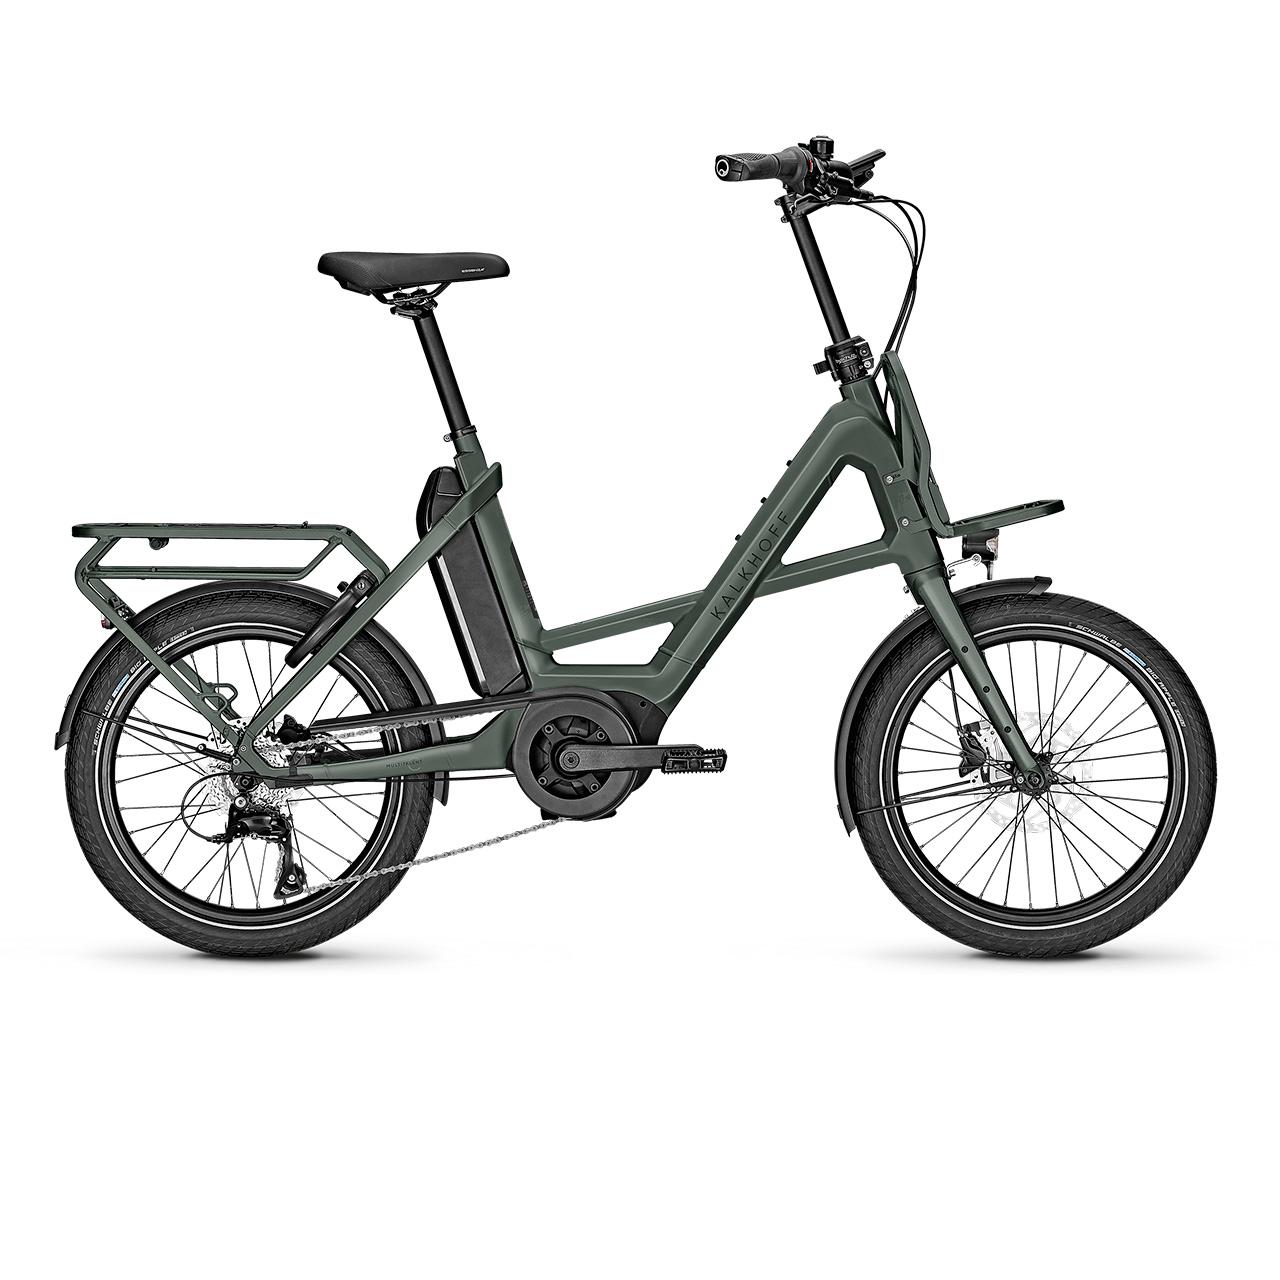 greenbike pesaro-assistenza bici elettriche pesaro-bici ruota 20-Endeavour C.B Move 20"